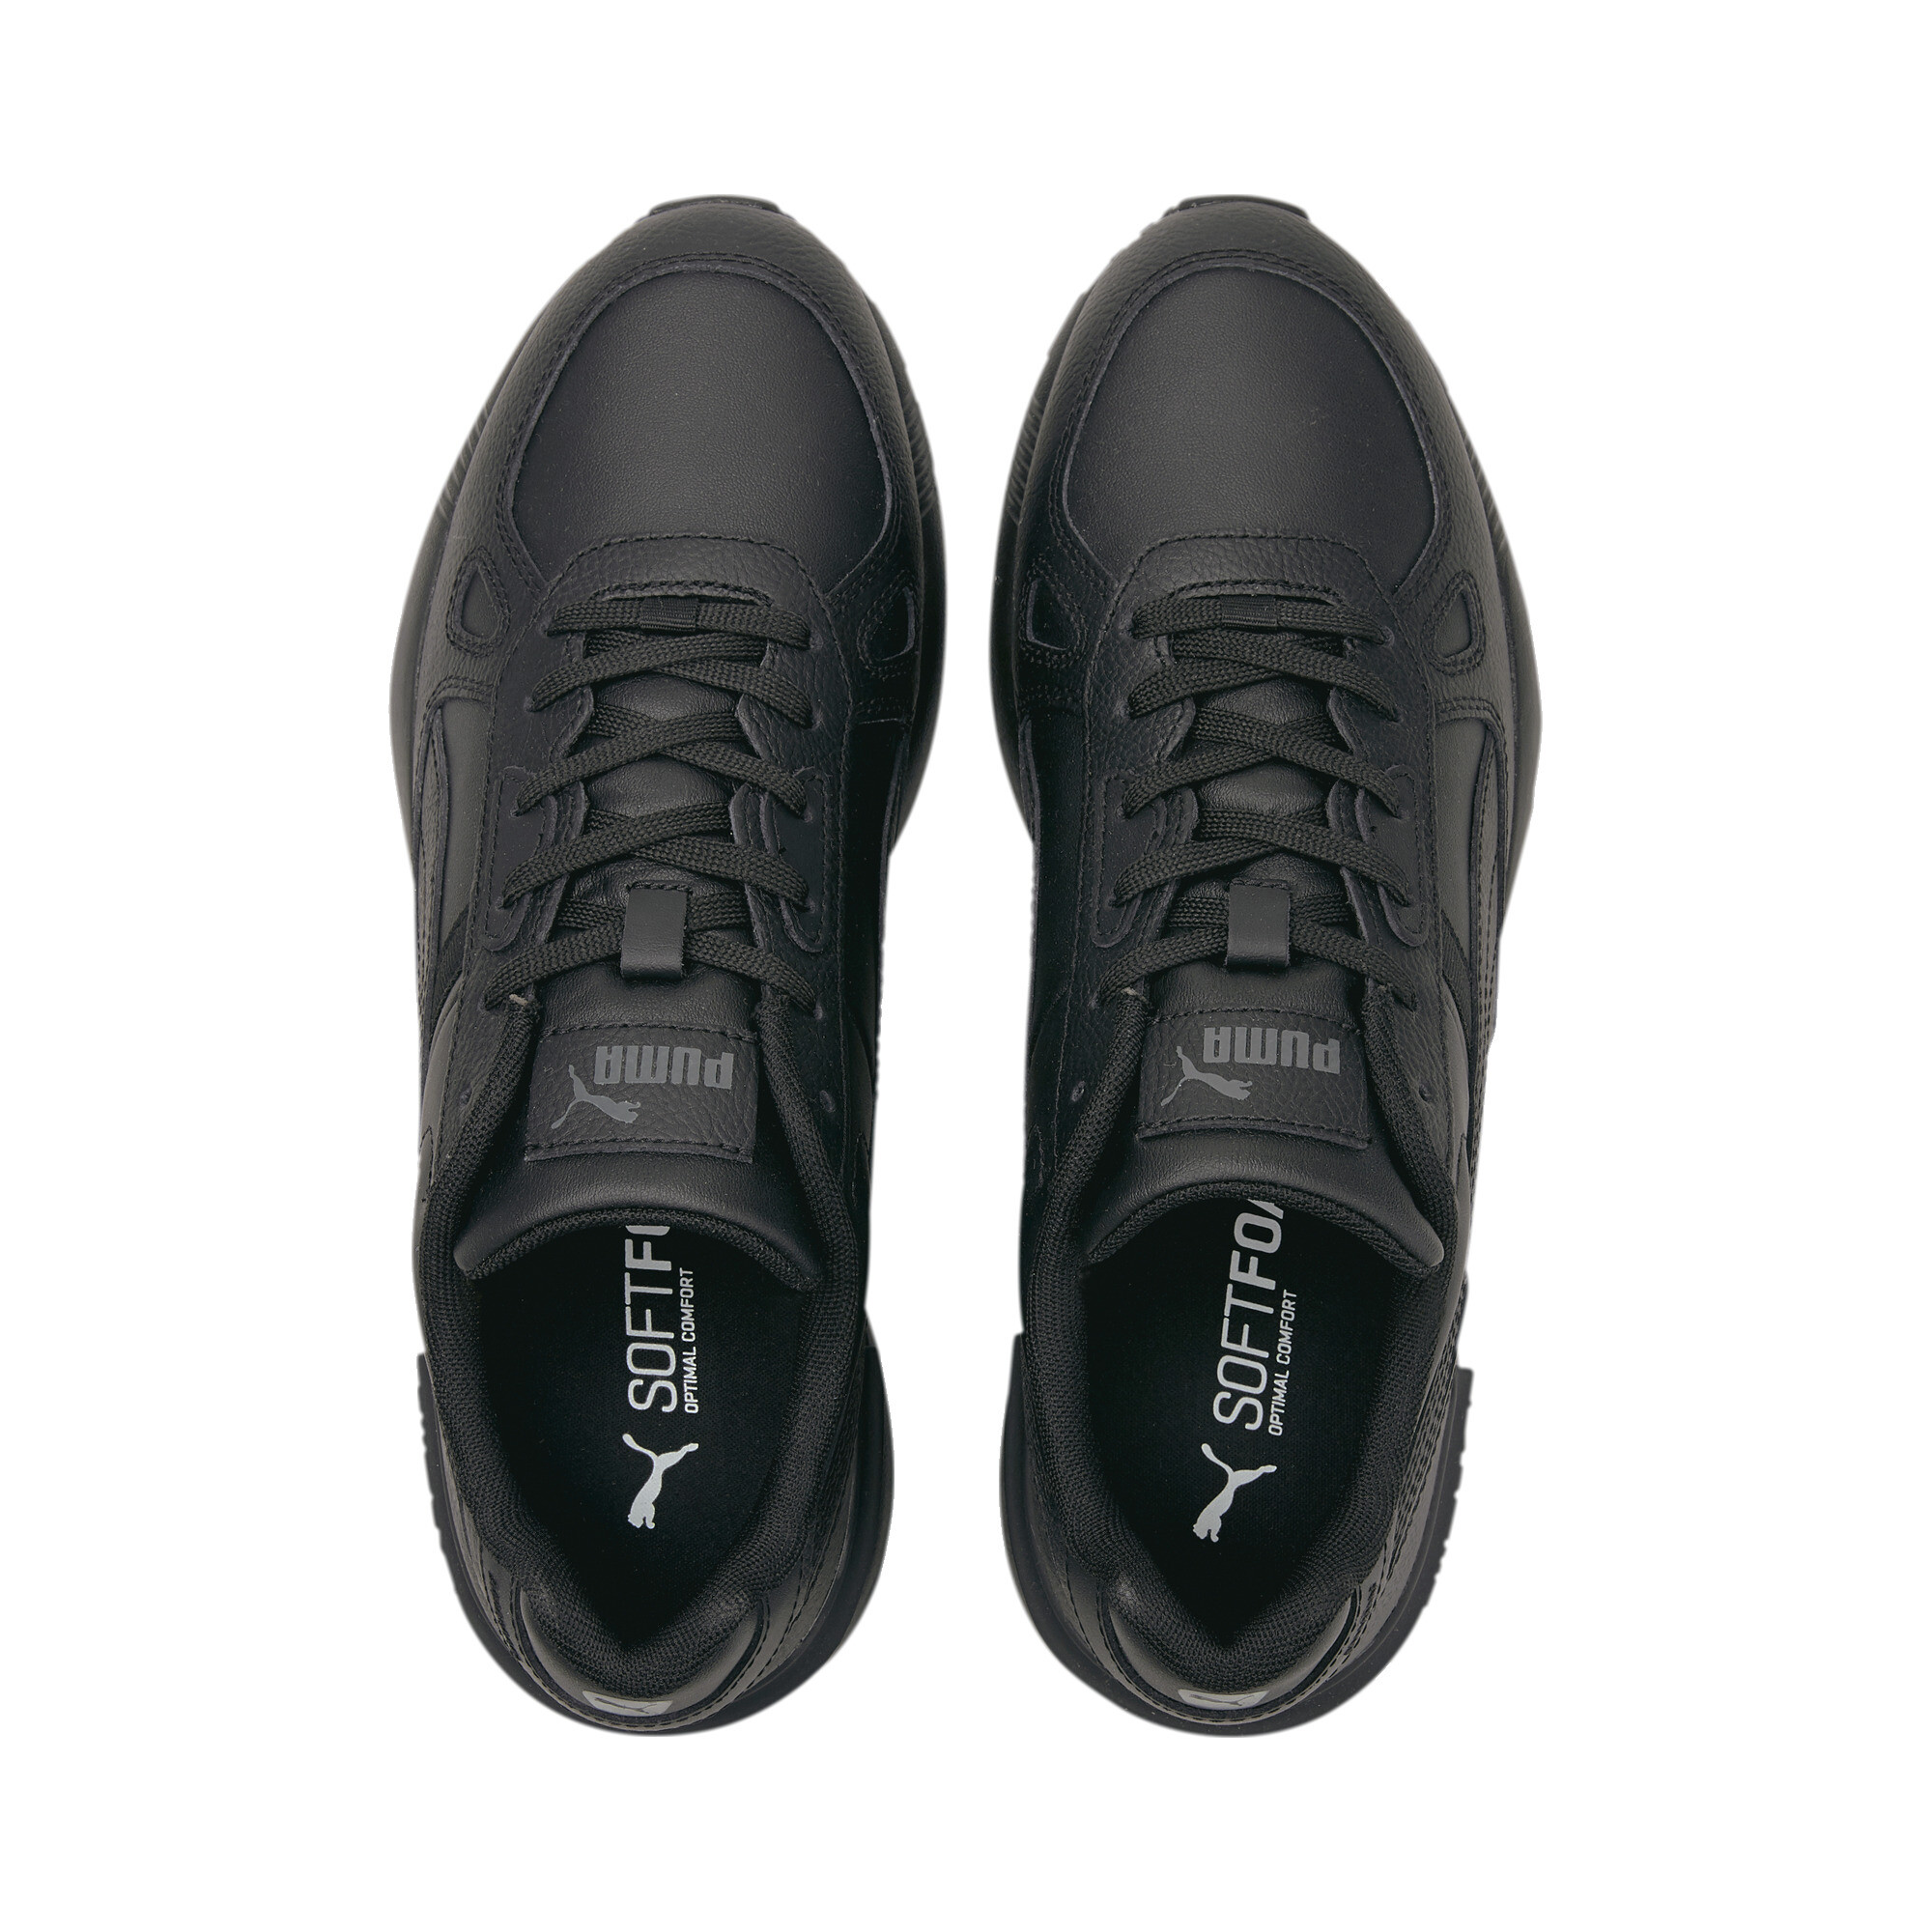 Puma Graviton Pro L Trainers, Black, Size 35.5, Shoes